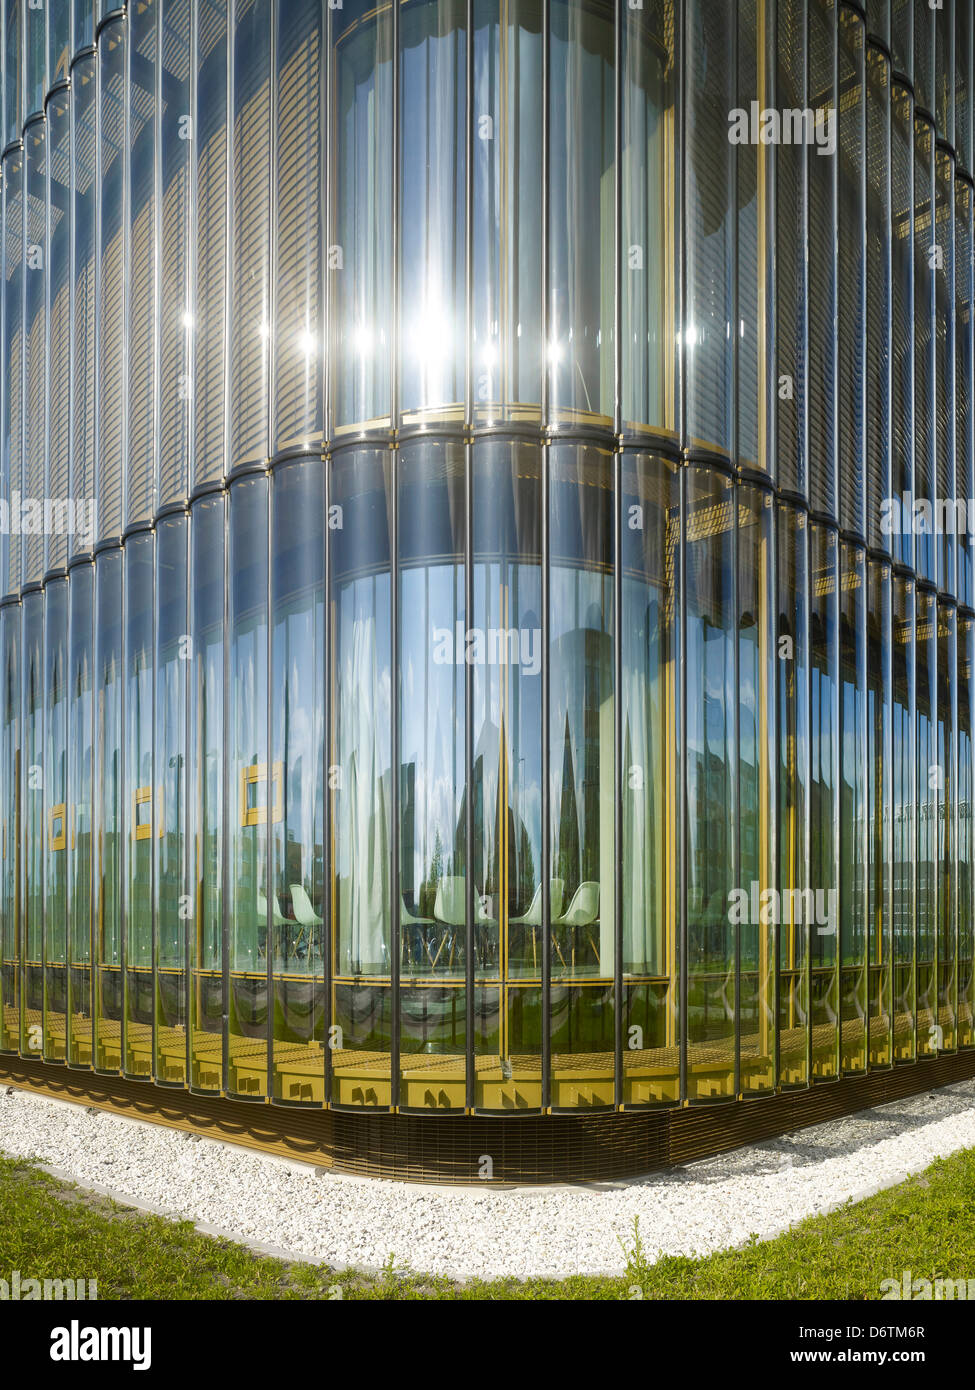 CJIB Building Leeuwarden, Leeuwarden, Netherlands. Architect: Claus + Kaan,  2012 Stock Photo - Alamy